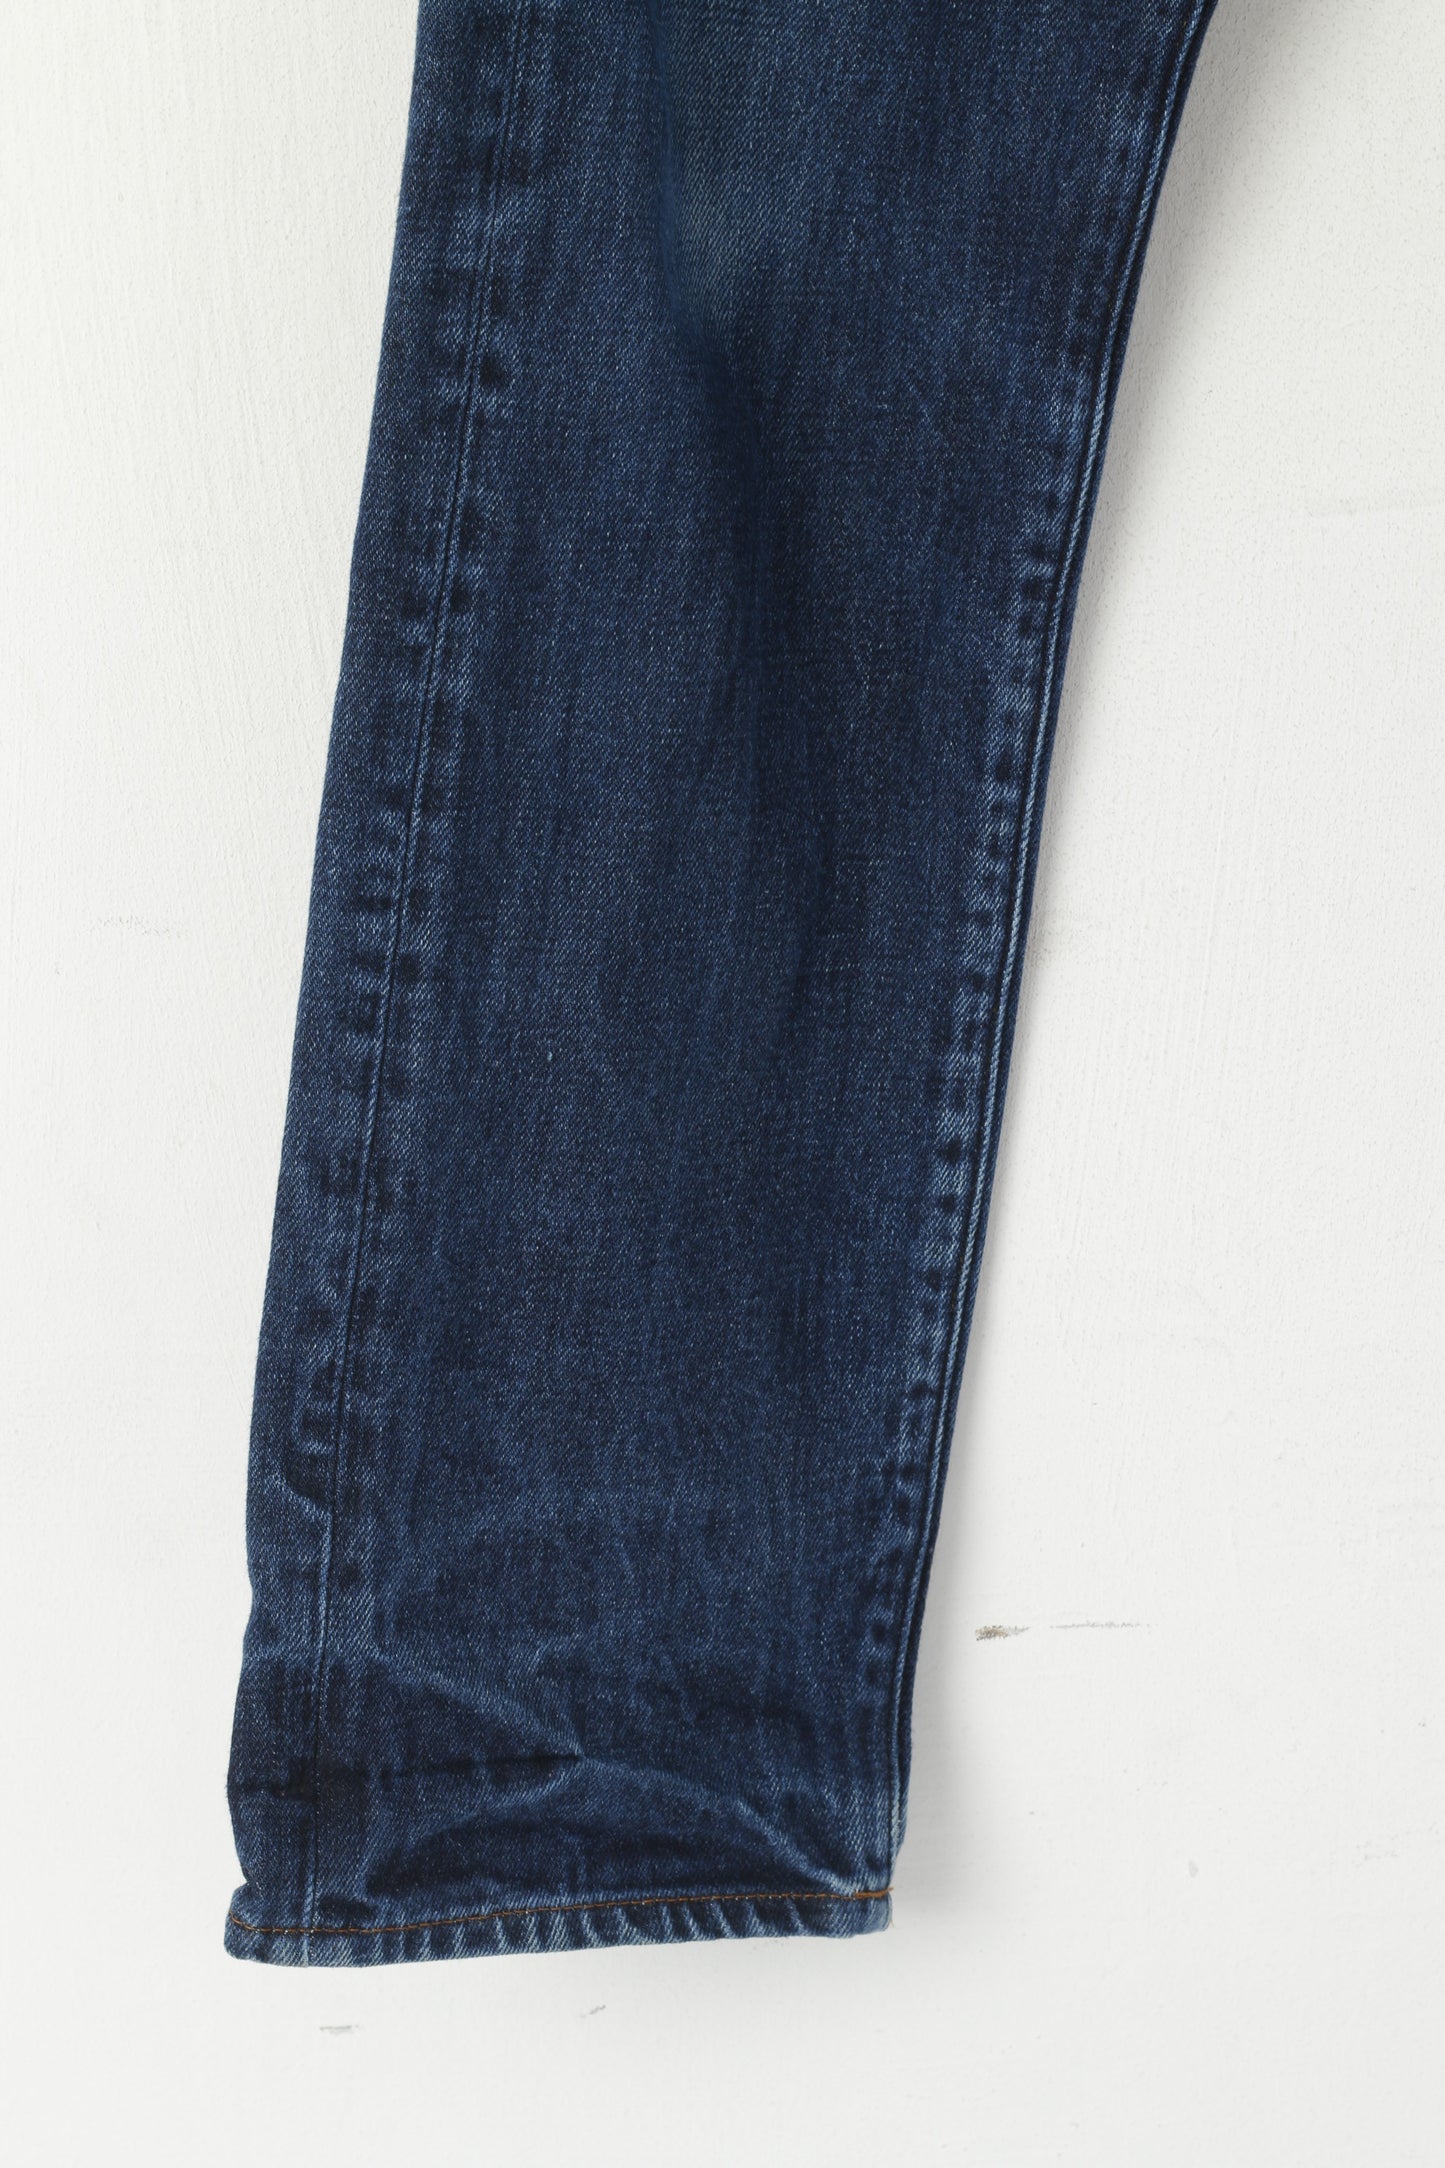 G-Star Raw Men 31 Jeans Pantalon Bleu Marine Denim Coton 3301 Pantalon Fuselé